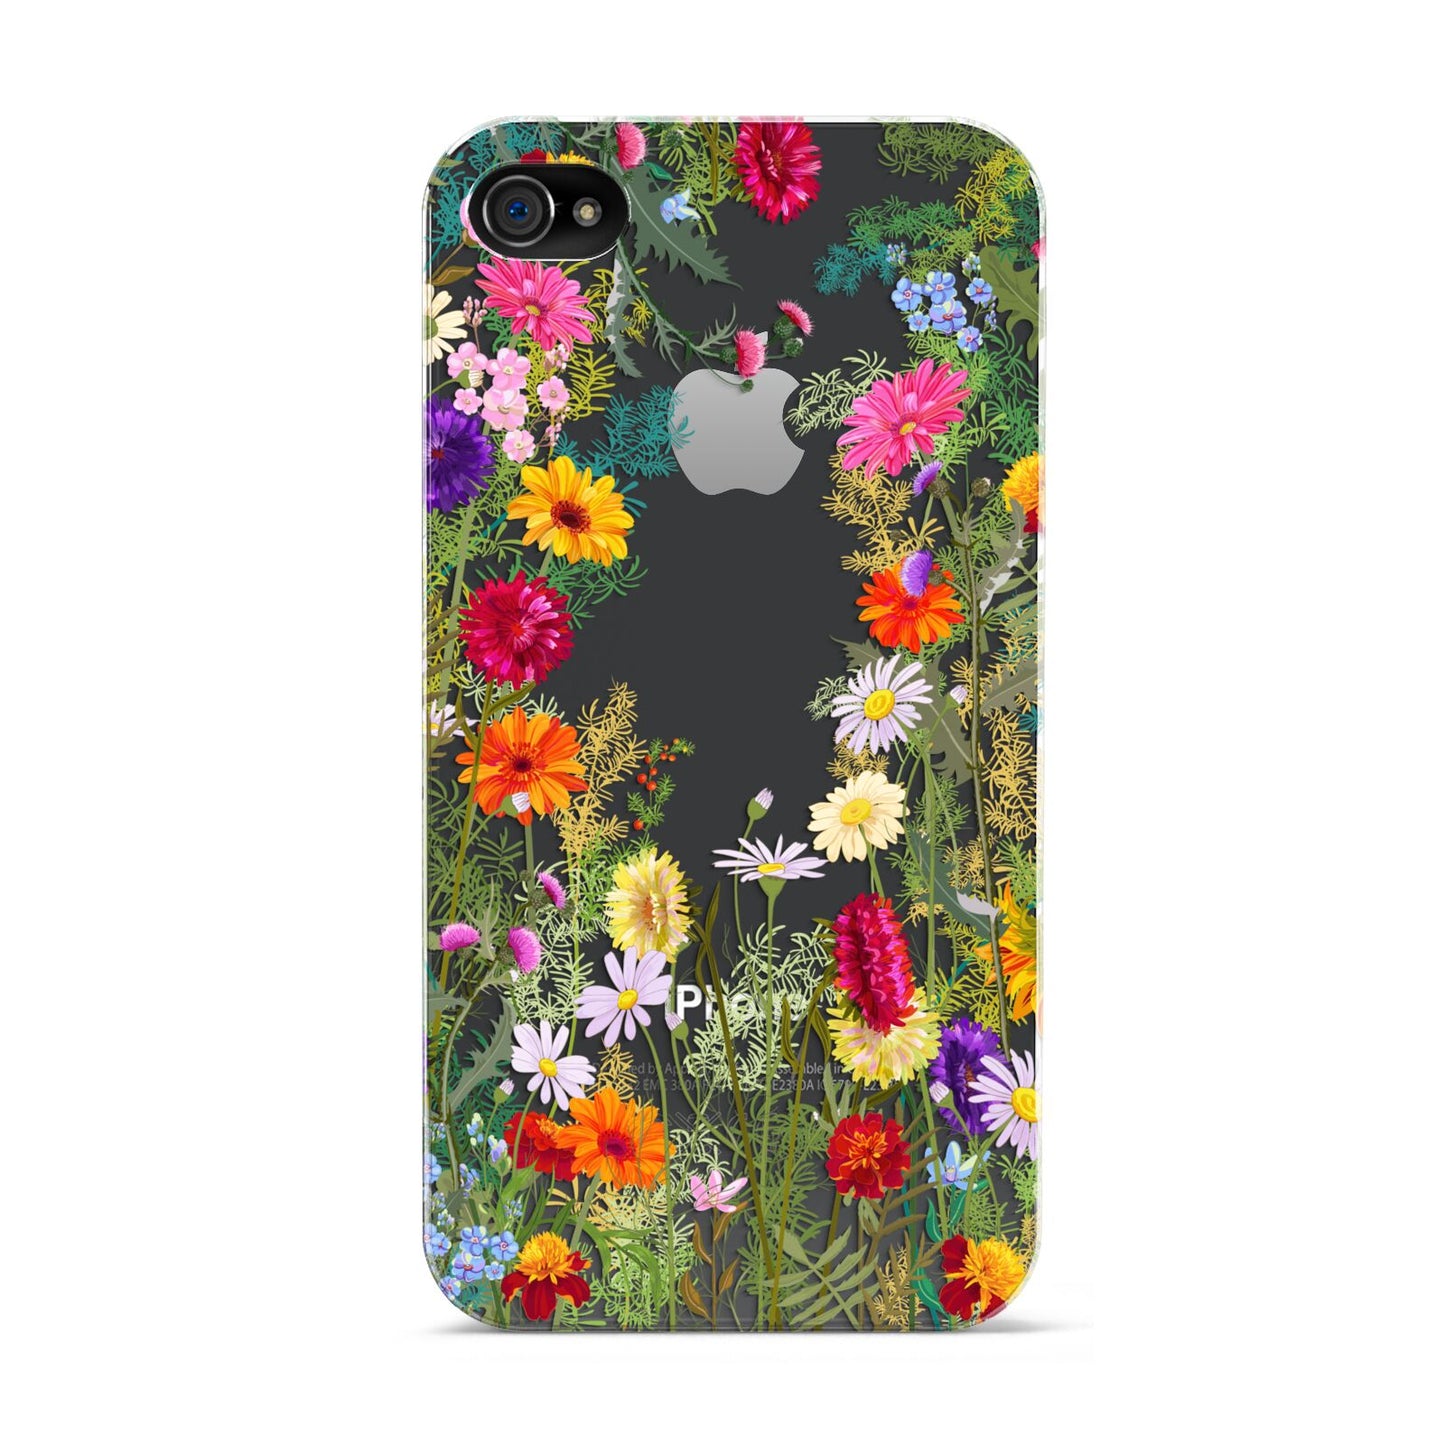 Wildflower Apple iPhone 4s Case